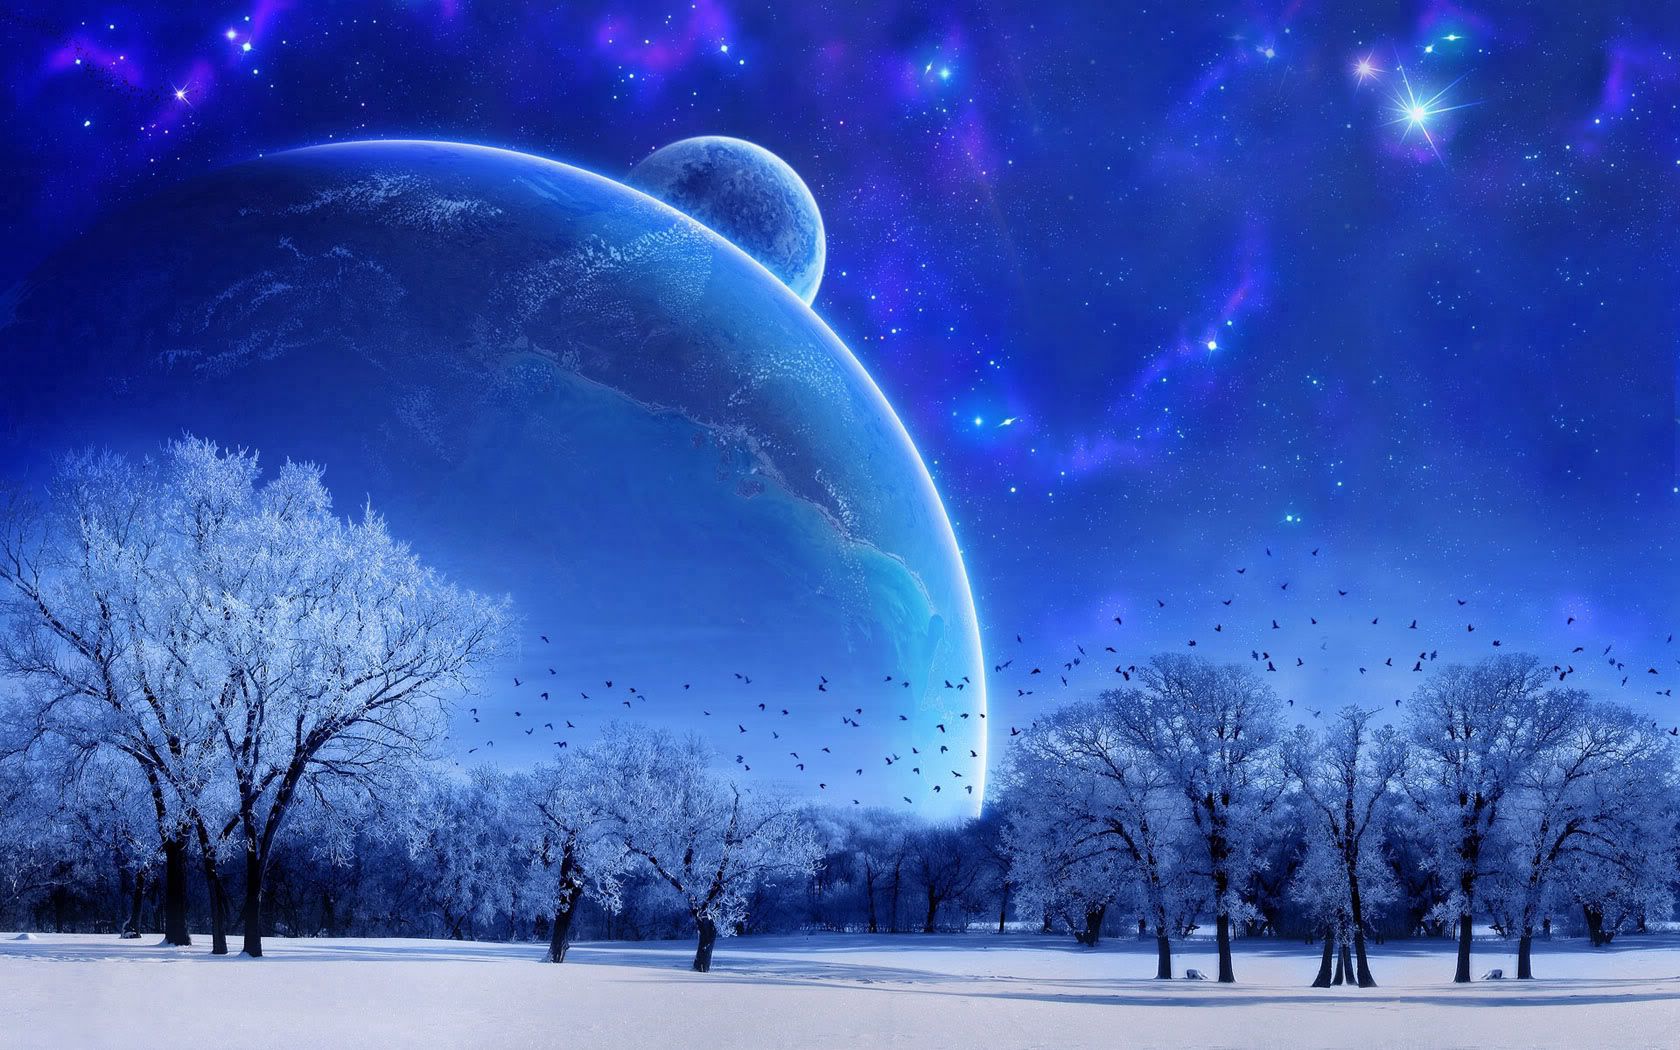 sky, landscape, abstract, nature, full moon, snow, winter, birds, trees, evening